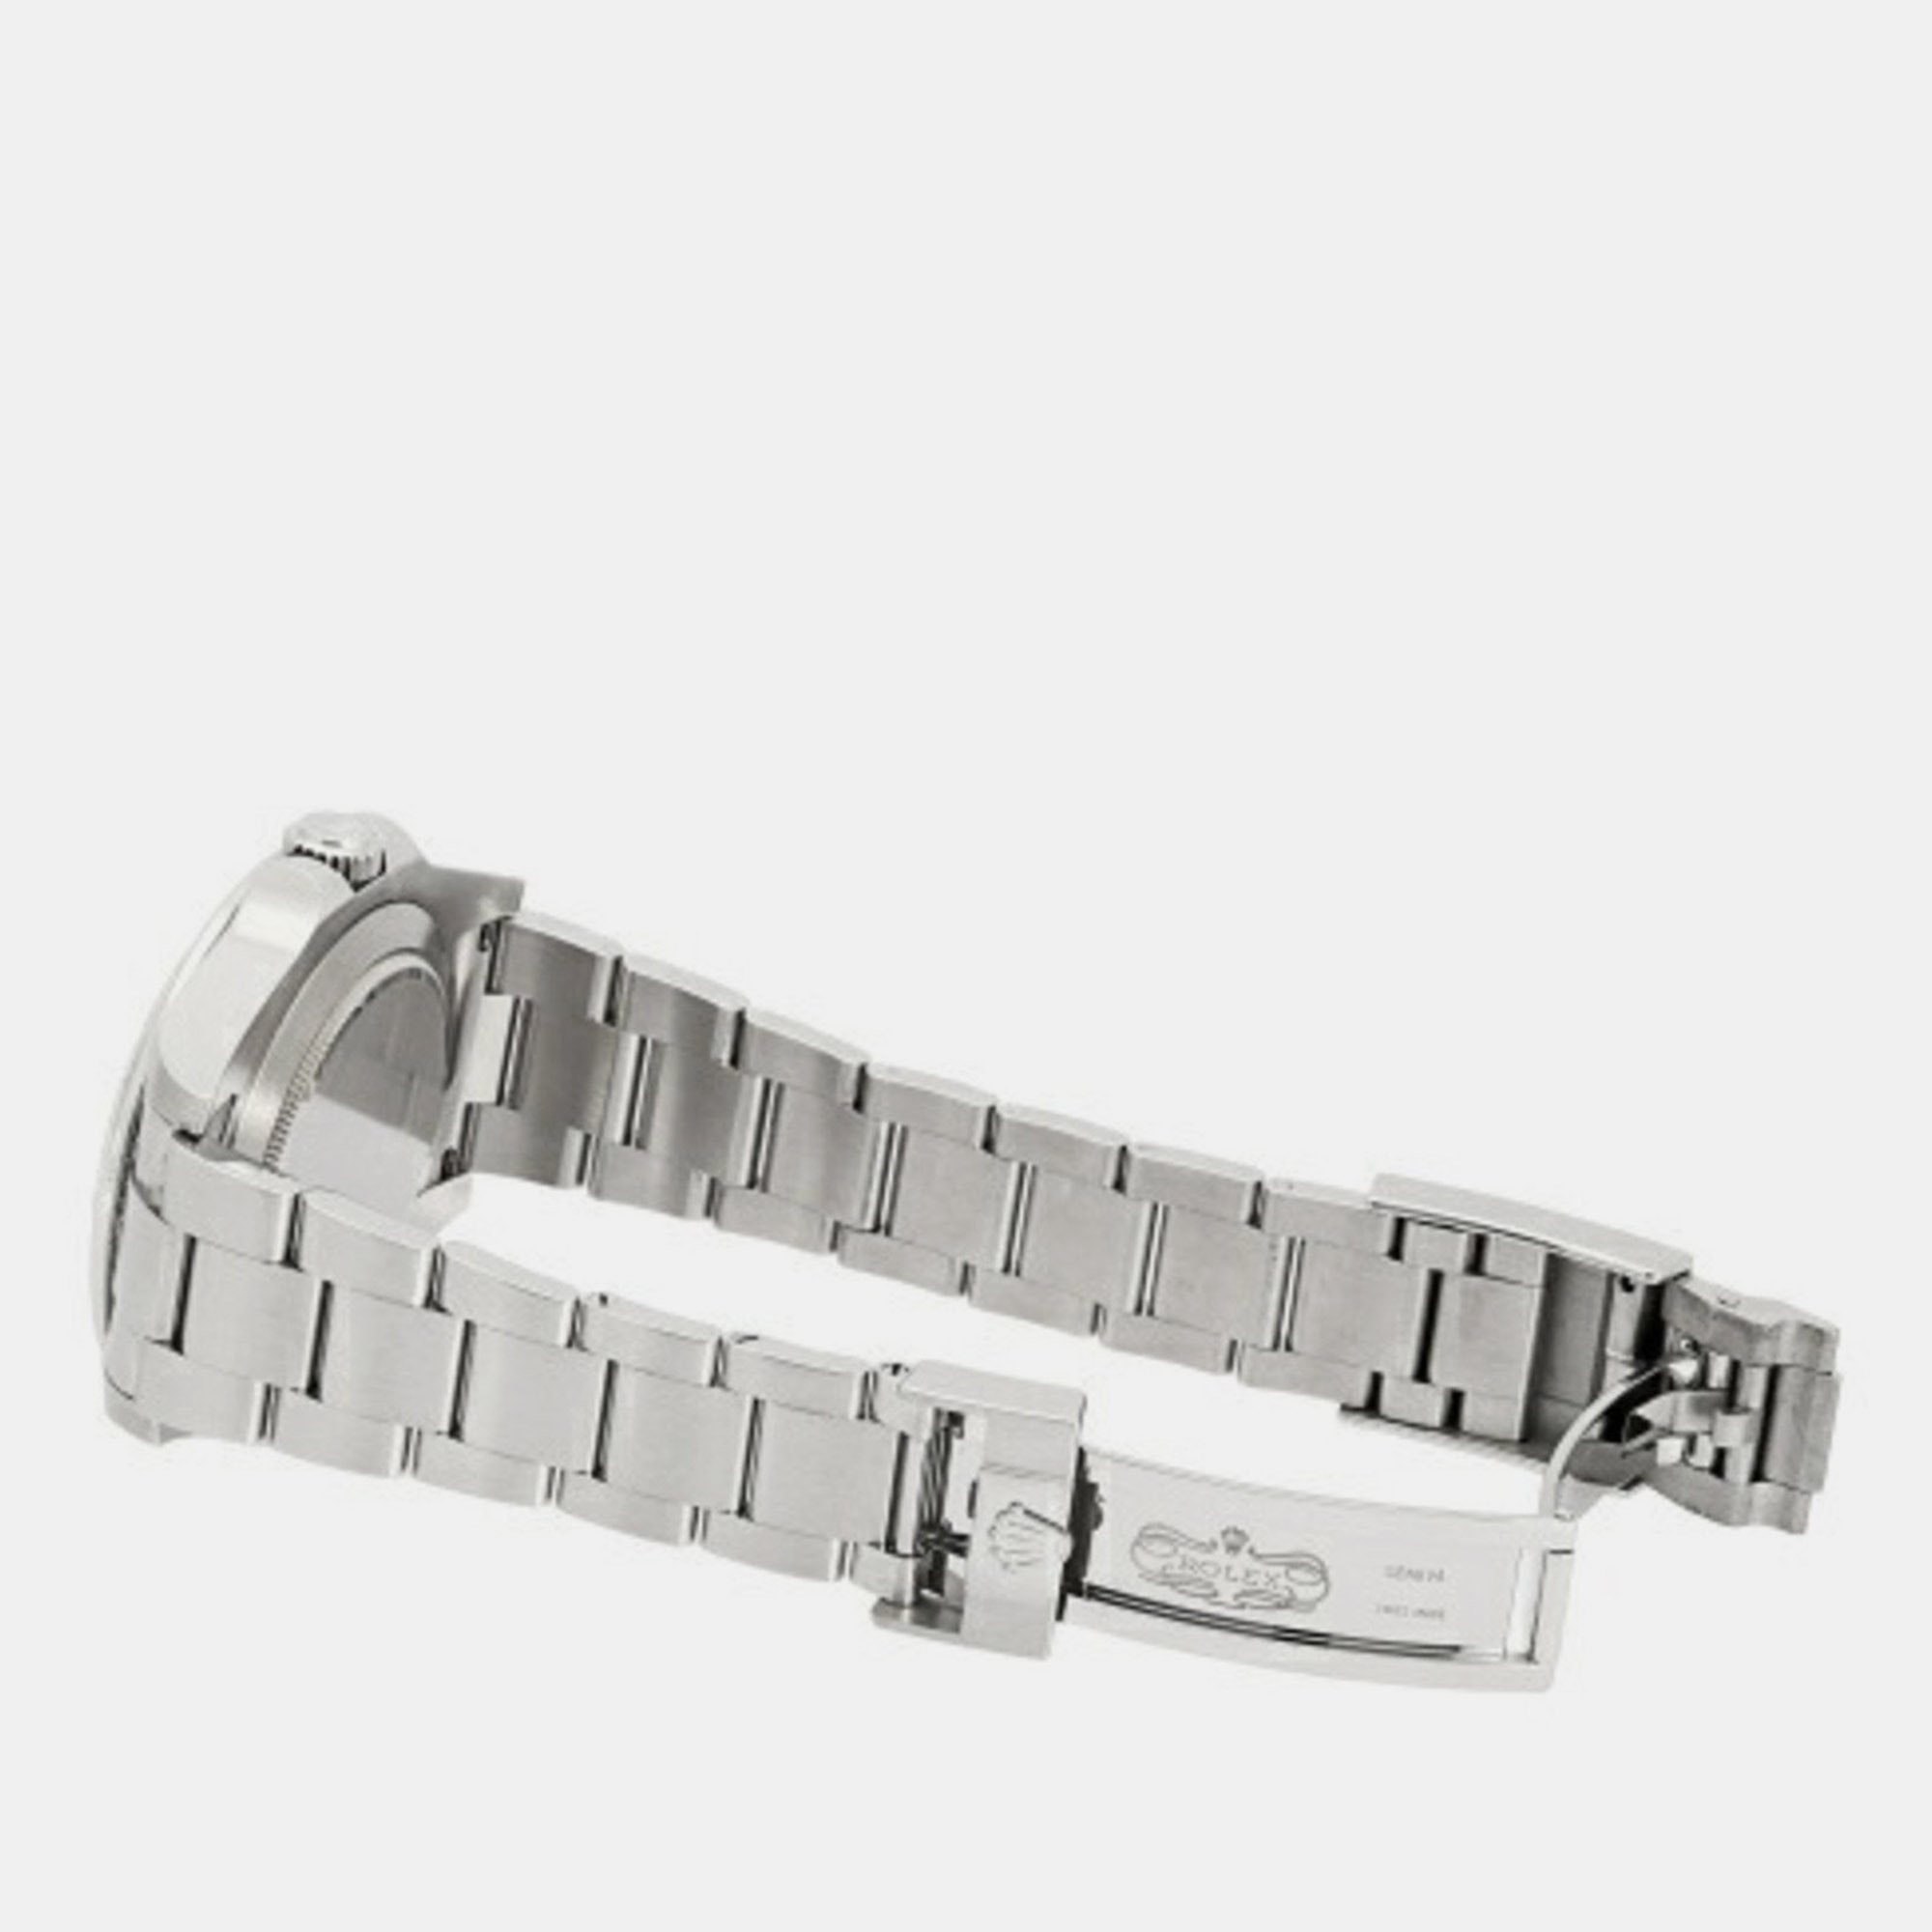 Rolex Black Stainless Steel Explorer II  216570 Automatic Men's Wristwatch 42 Mm